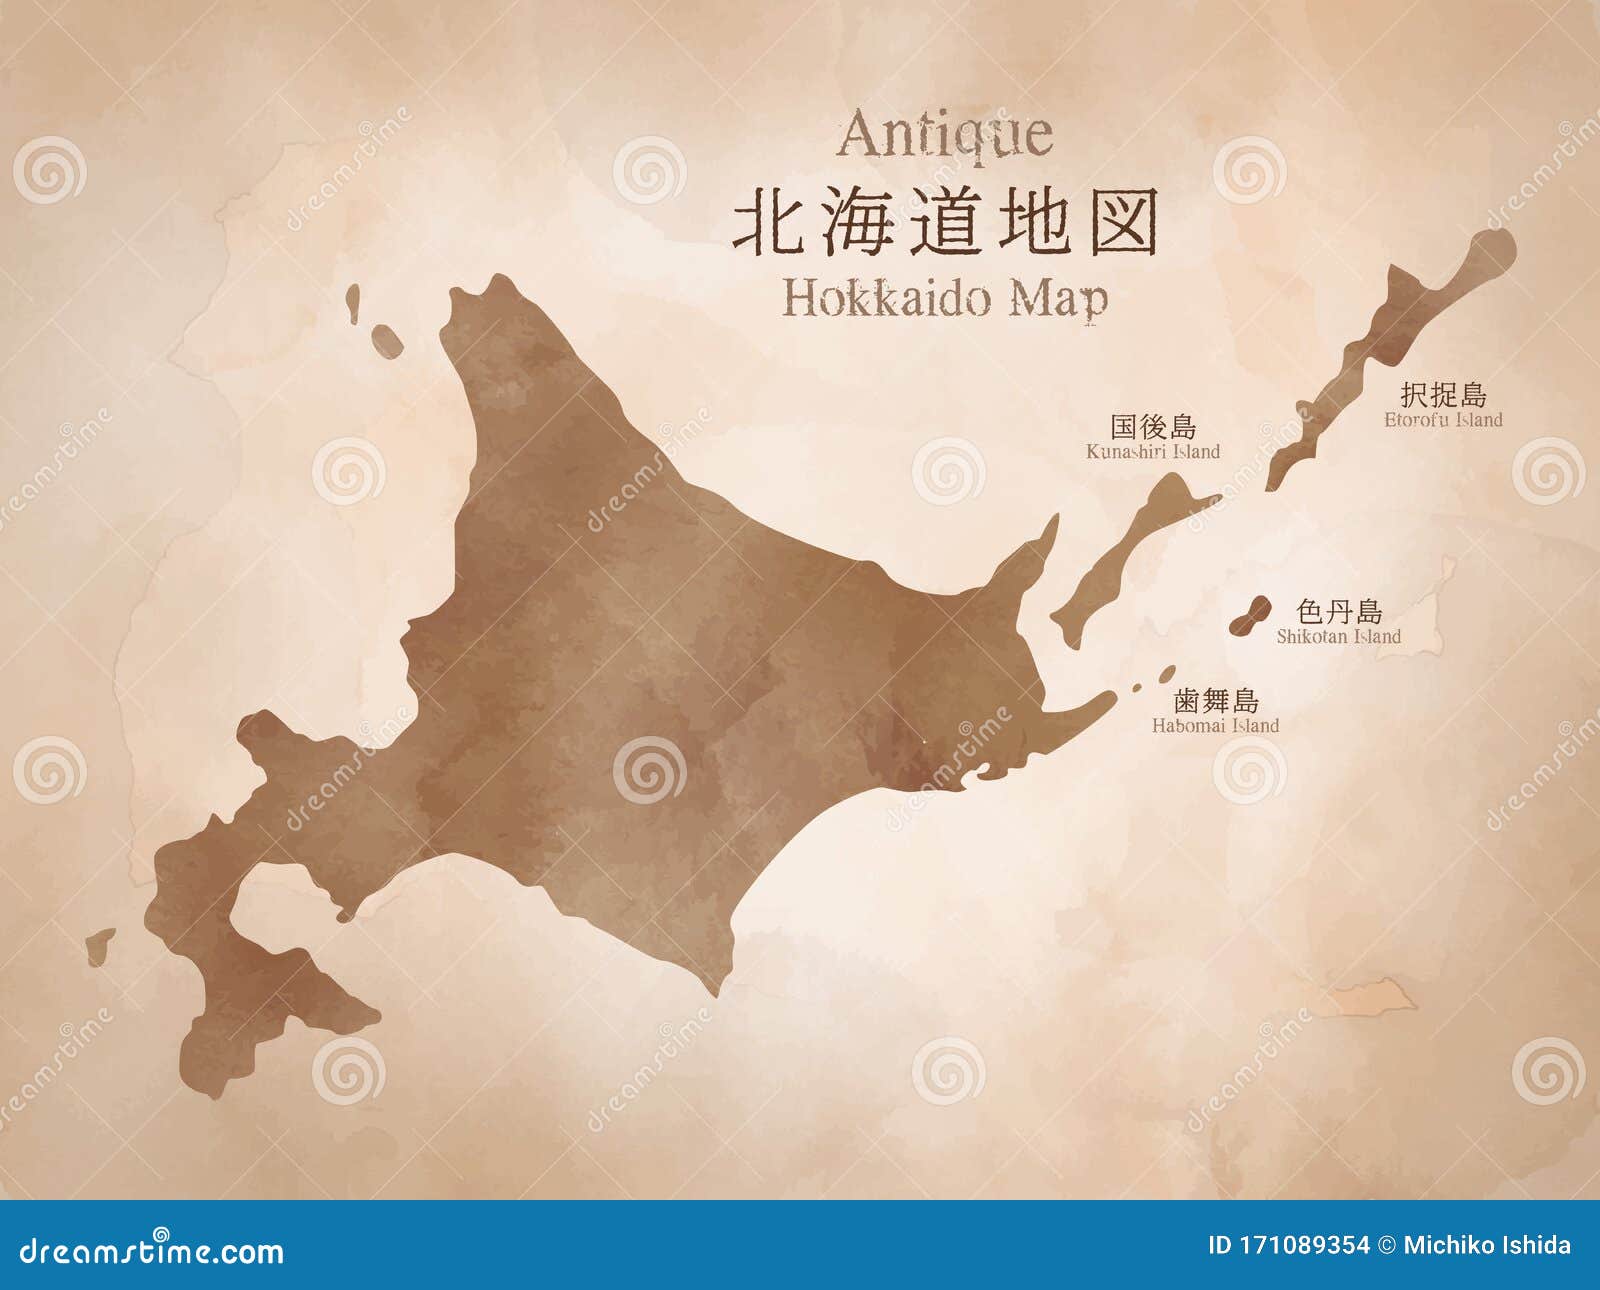 japan hokkaido region antique map with watercolor texture